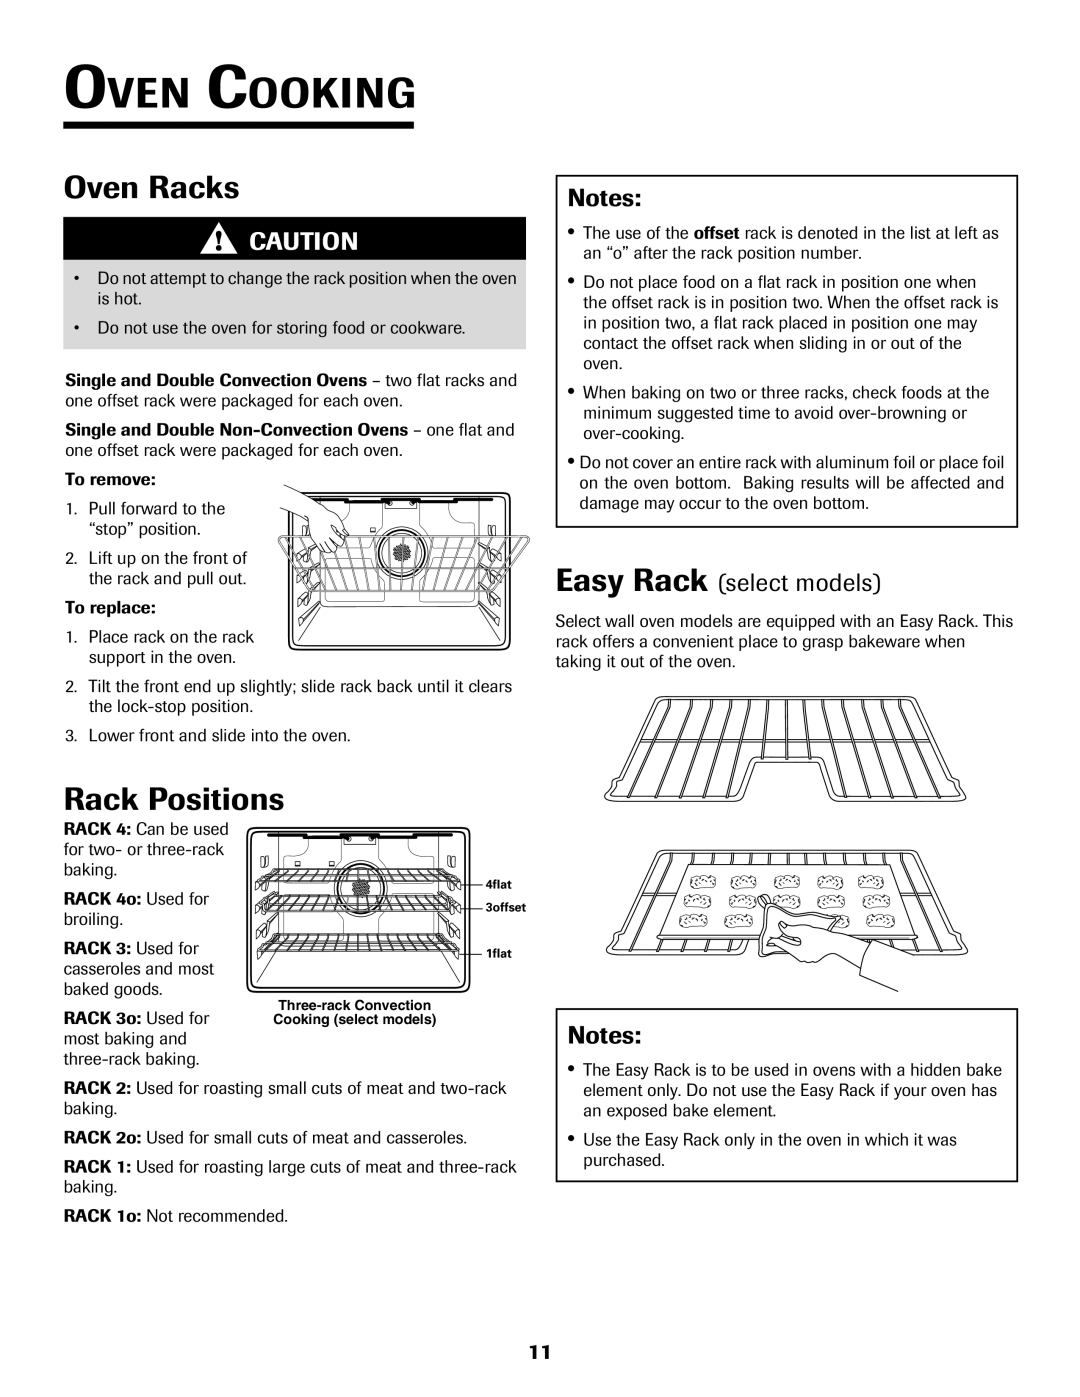 Jenn-Air 8112P212-60 warranty Oven Racks, Rack Positions, Notes, Easy Rack select models, Oven Cooking 